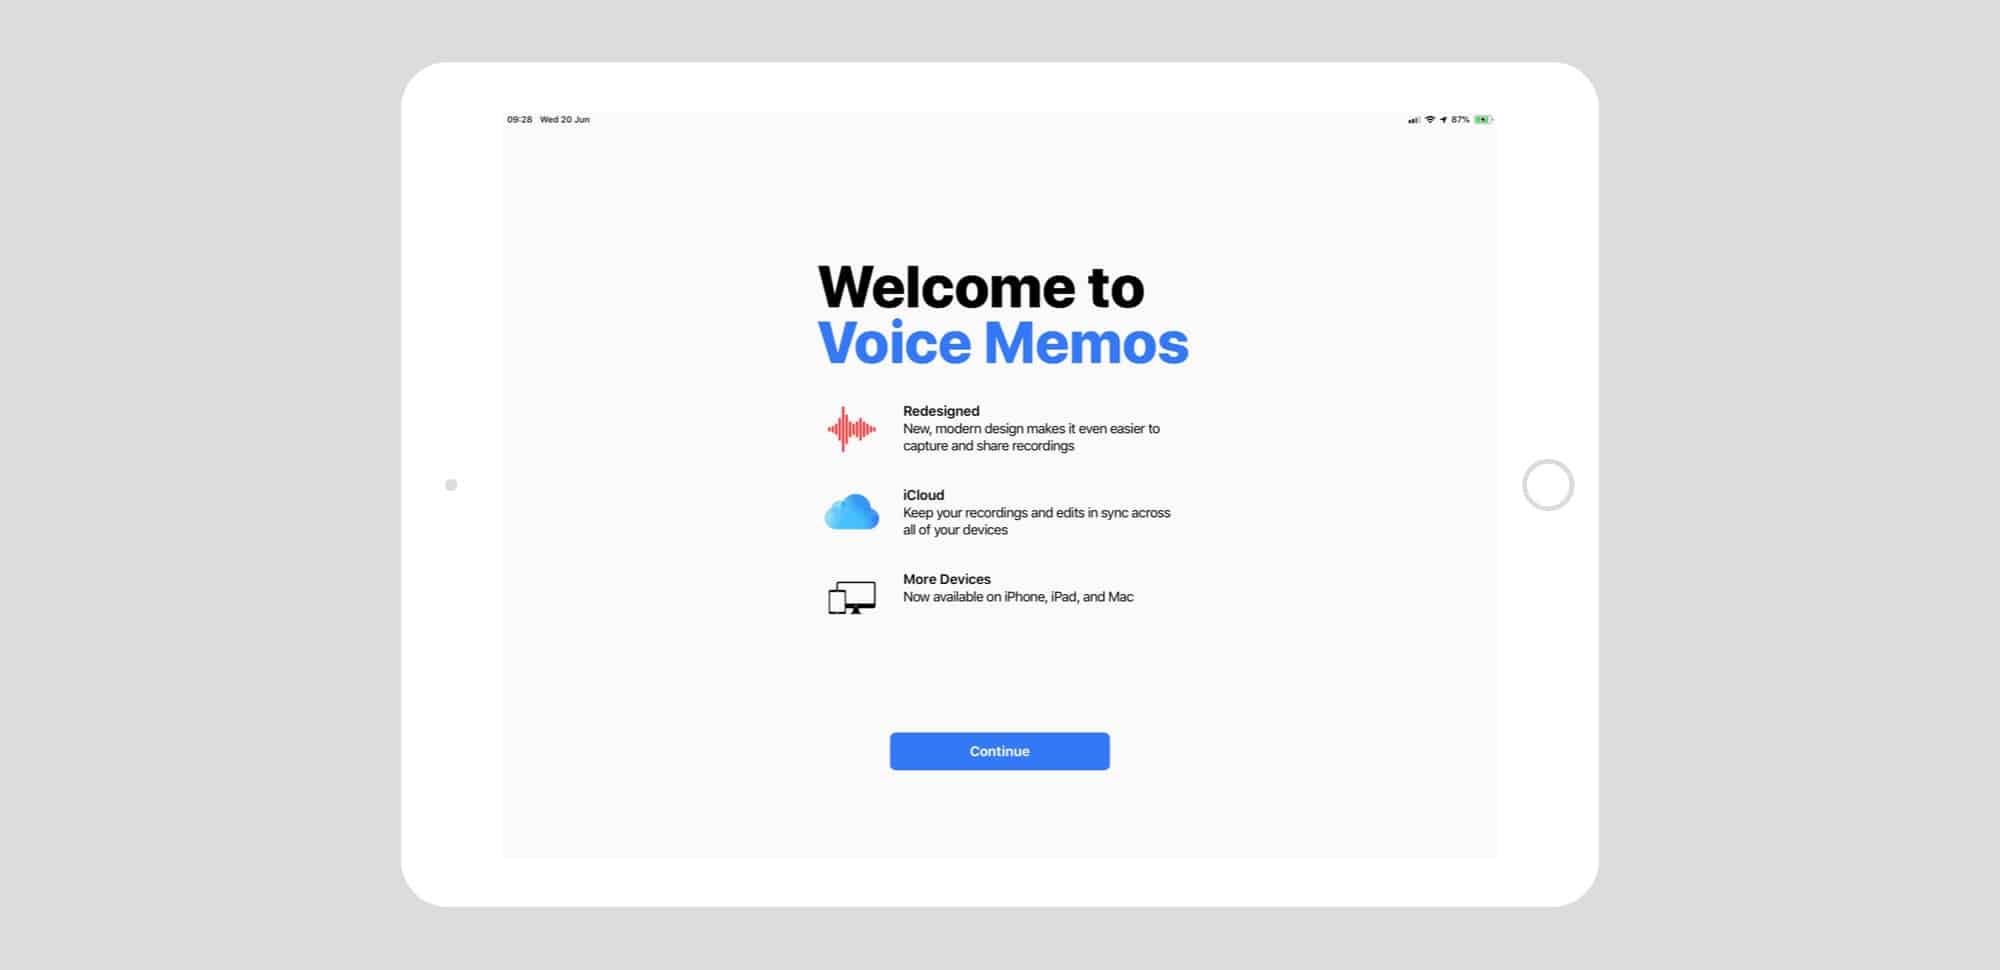 Voice Memos gets a new splash screen in iOS 12 beta 2.